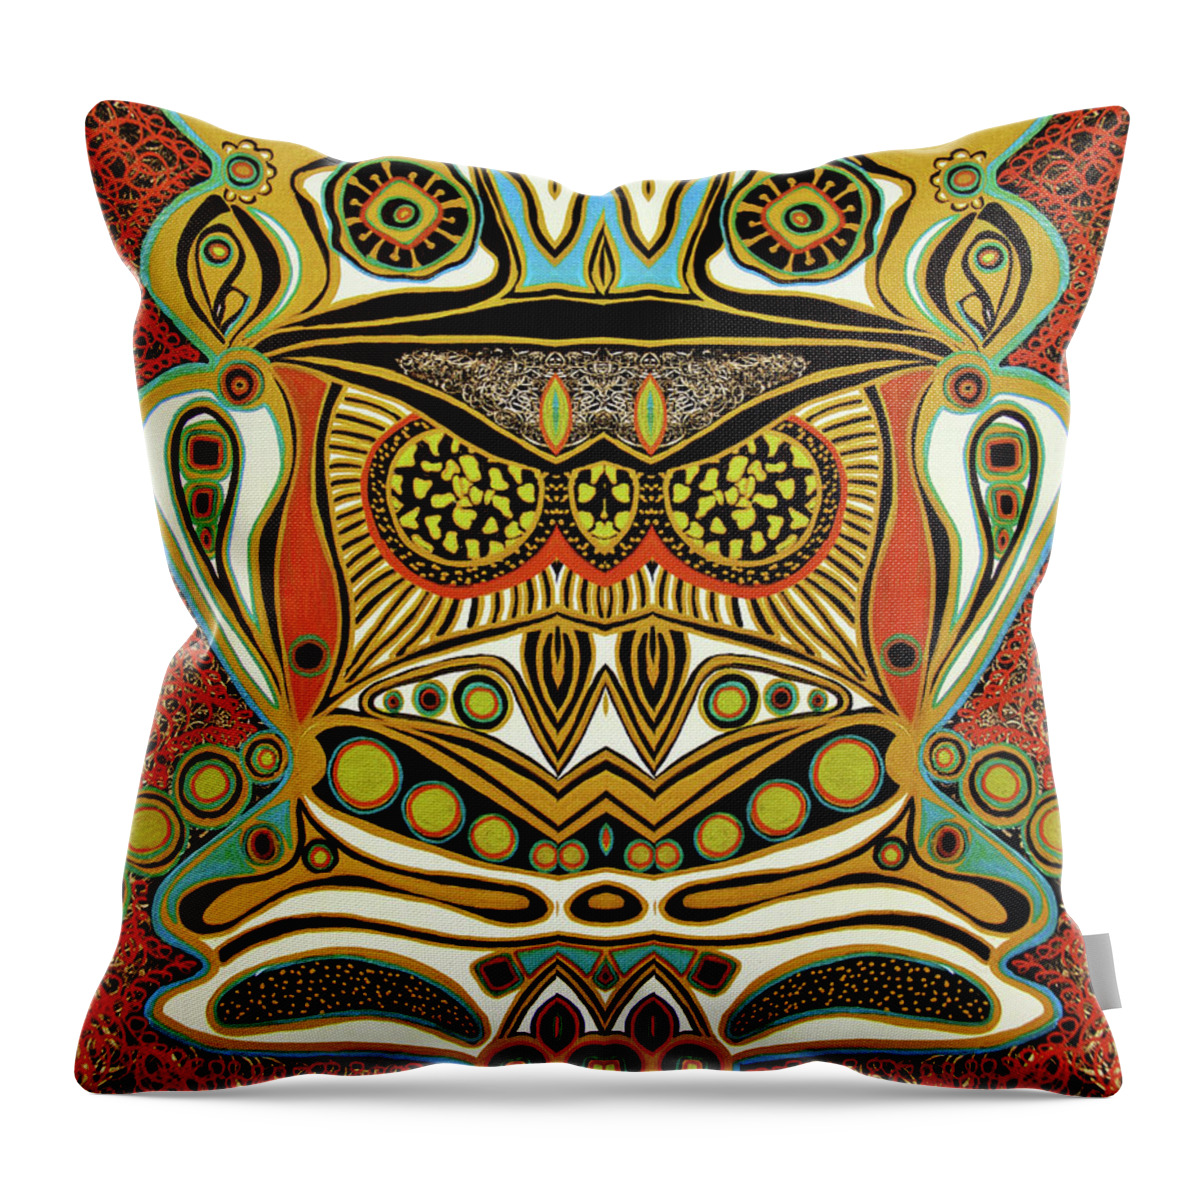 Abstract Throw Pillow featuring the mixed media The world of patterns by Jolanta Anna Karolska